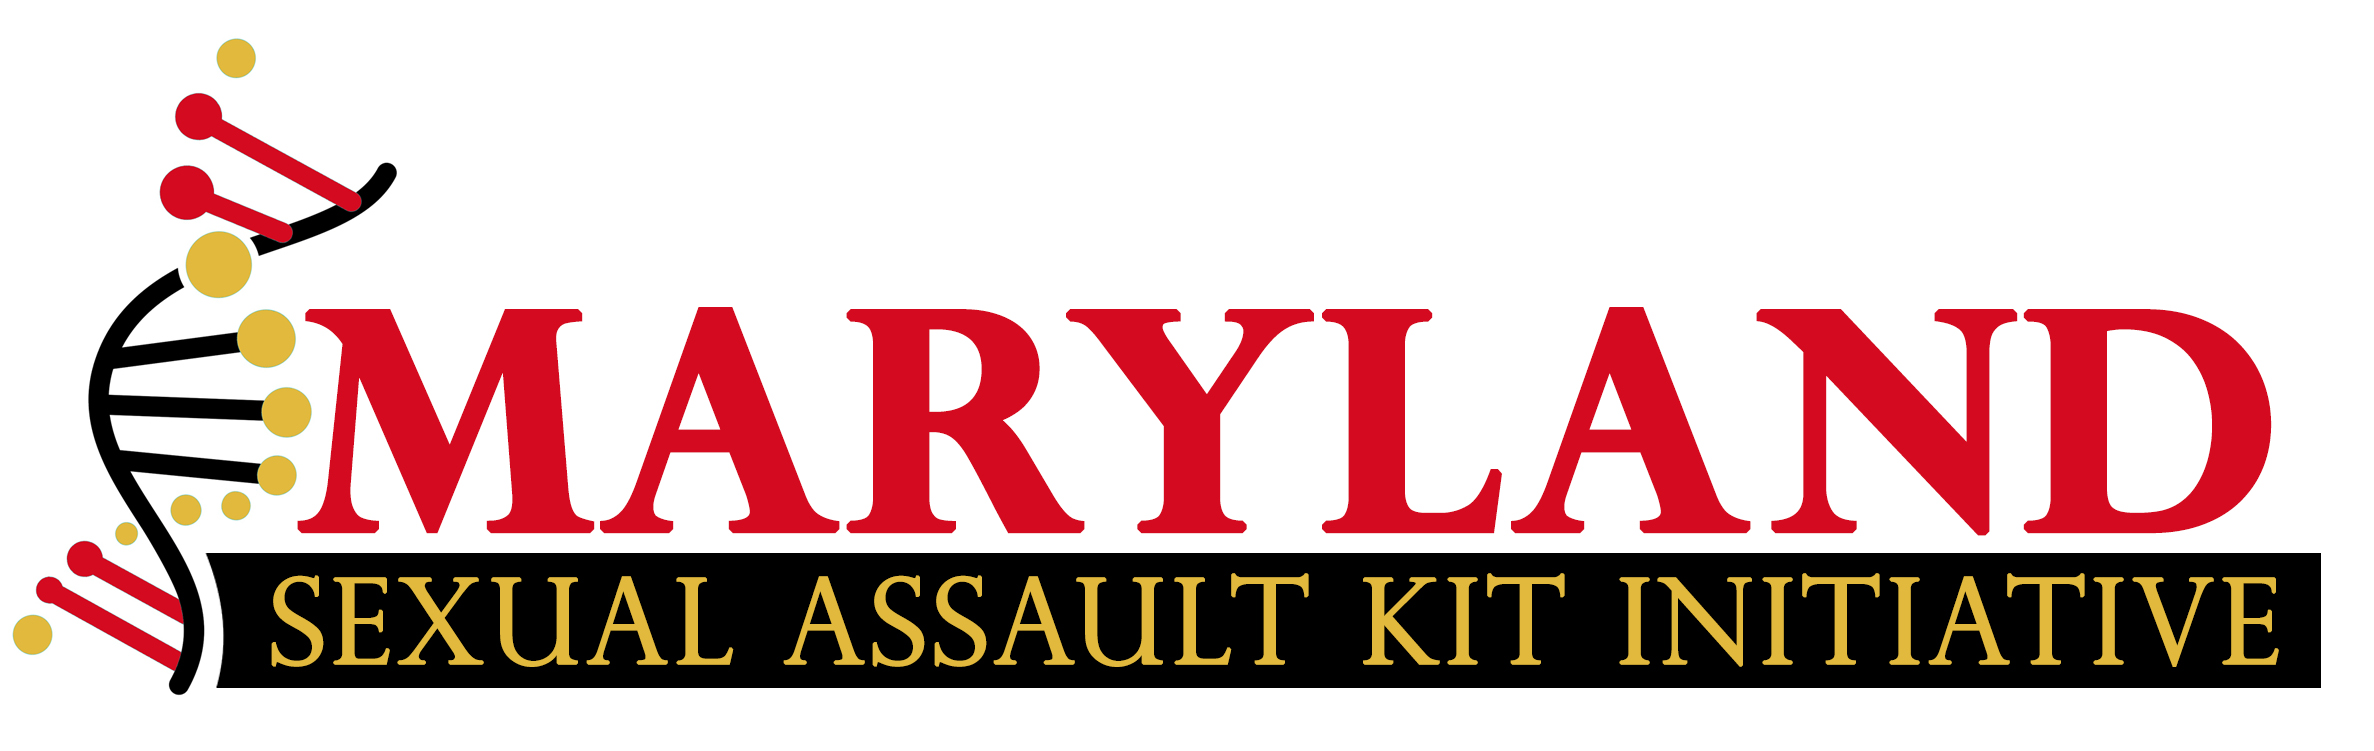 MAryland Sexual Assault Kit Initiative Logo